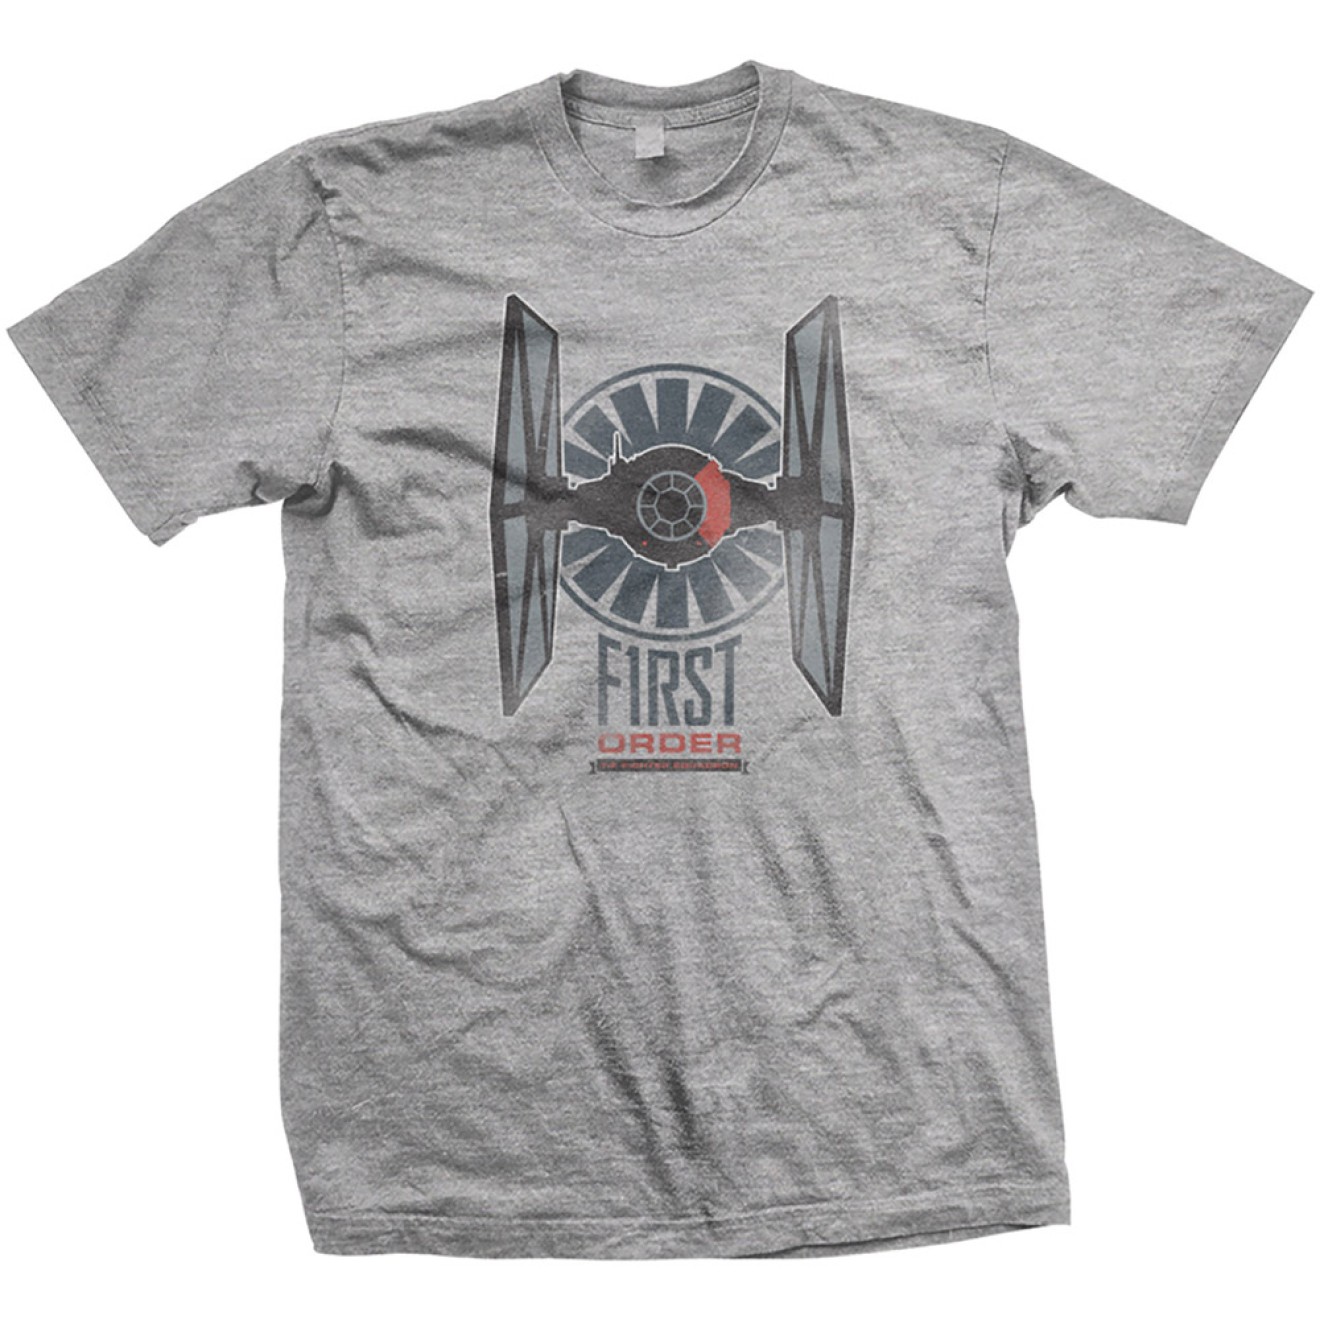 Star Wars T-Shirt First order distress tee